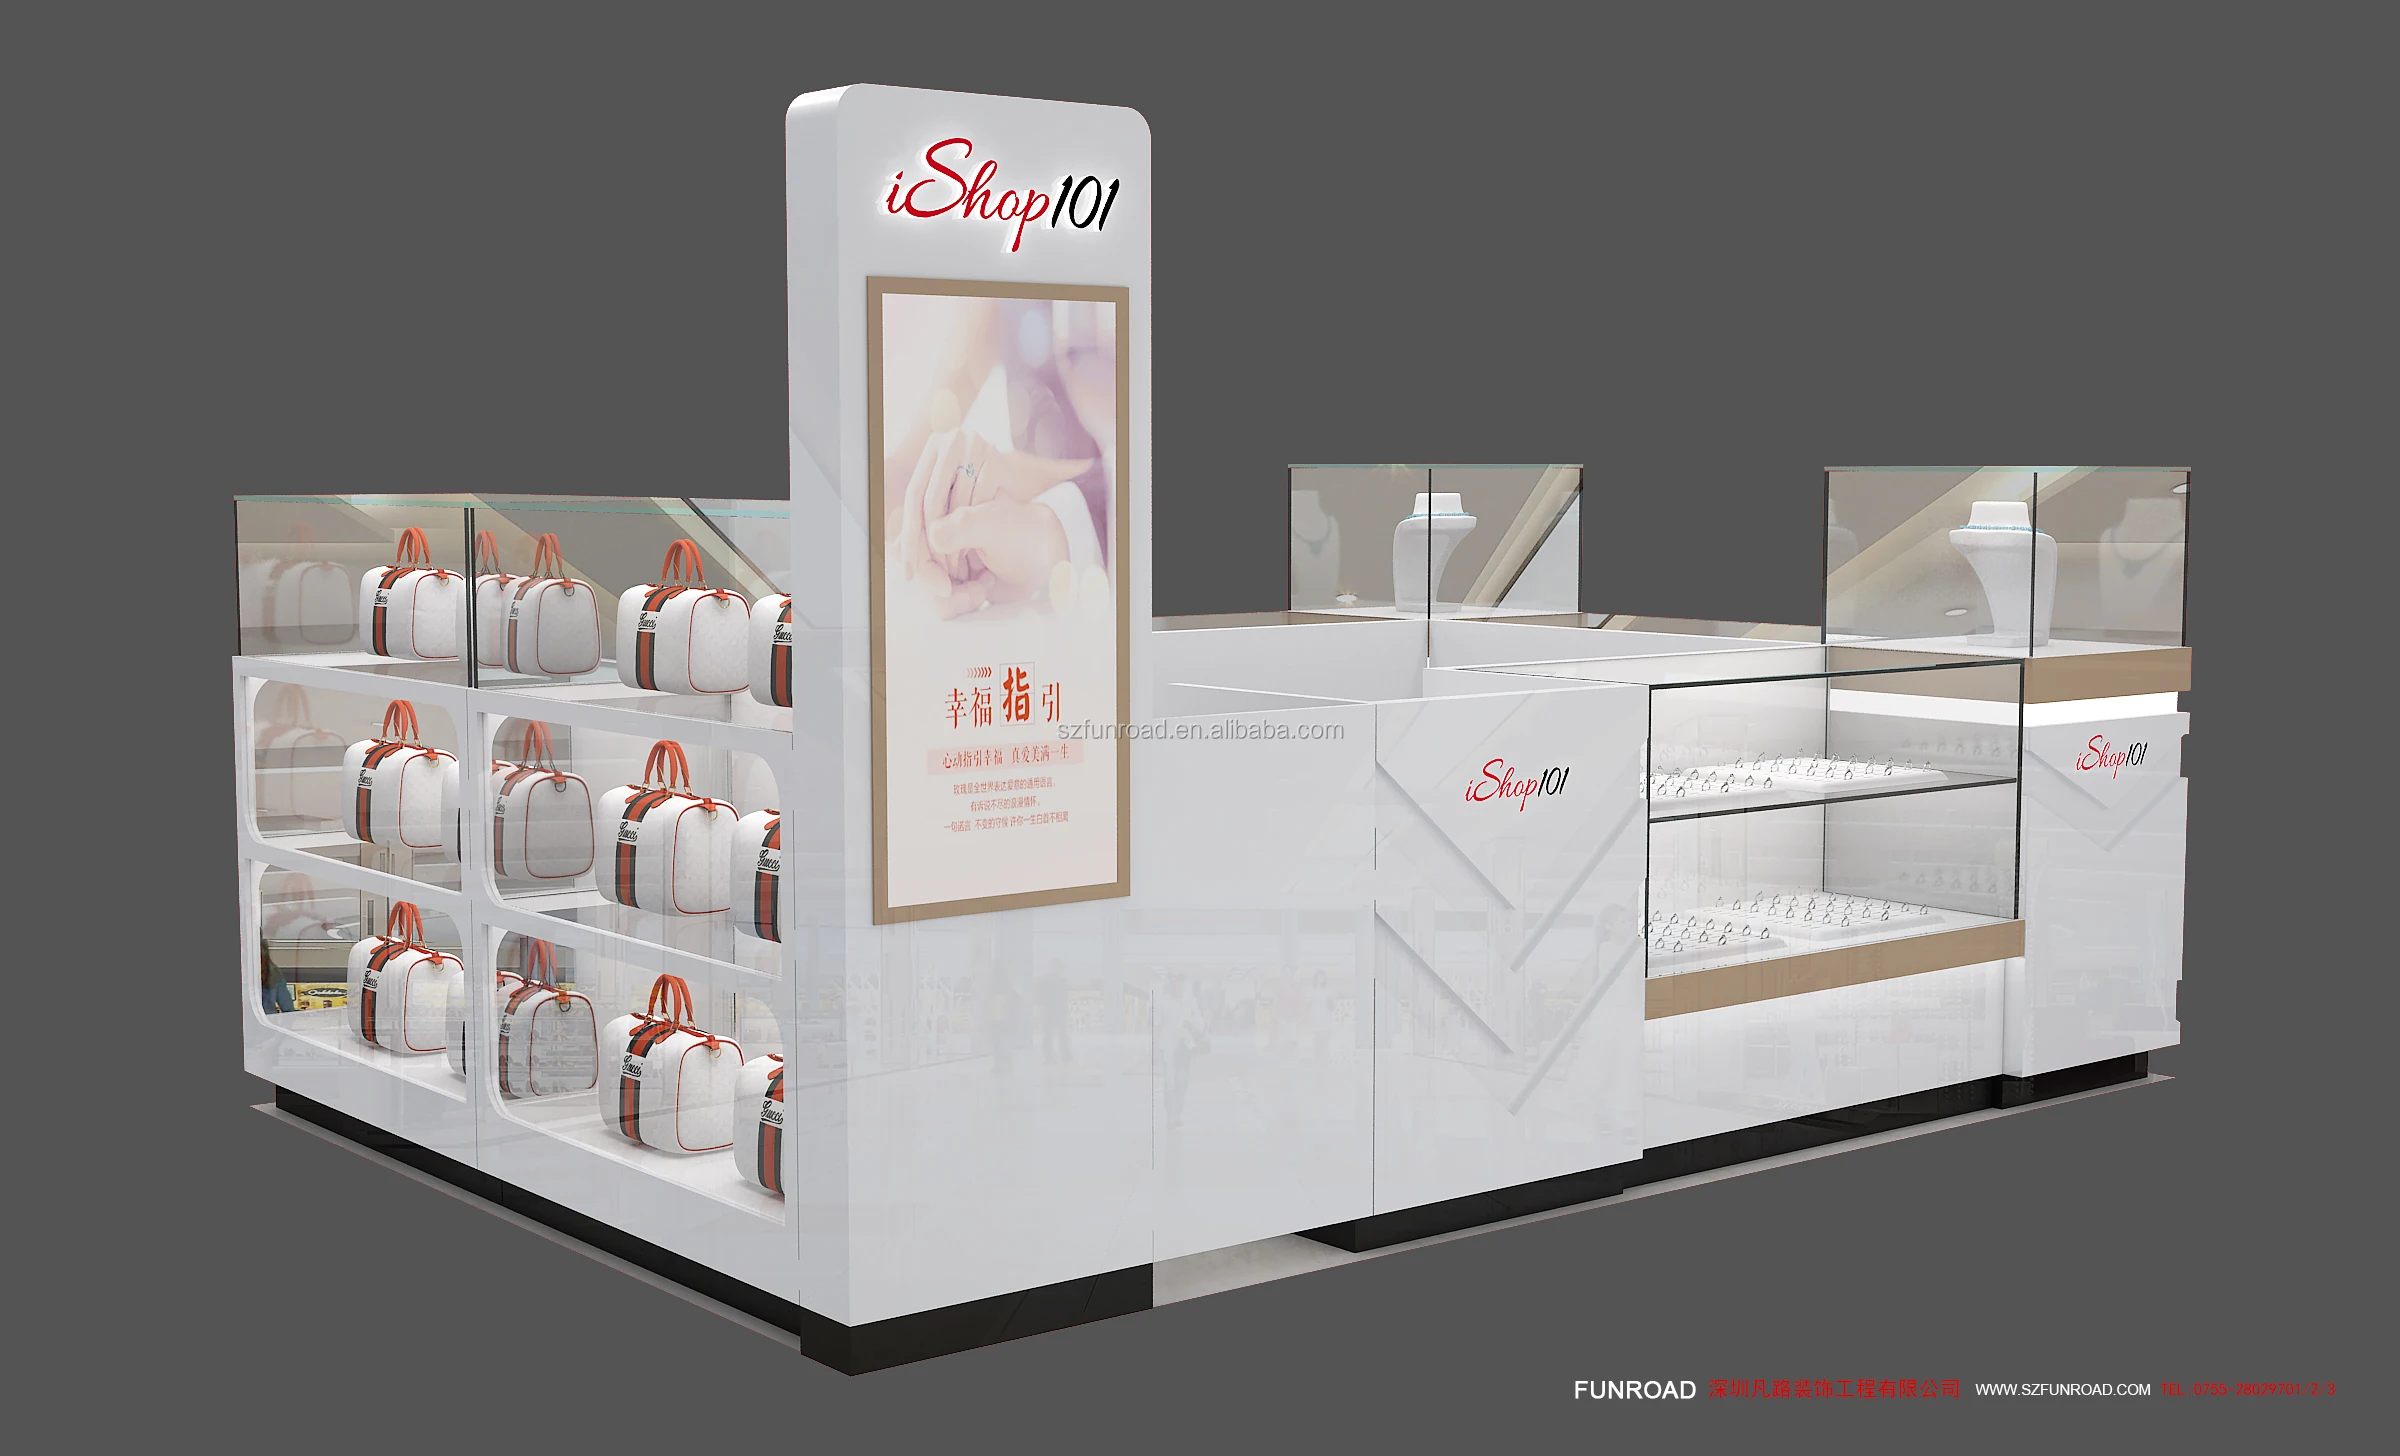 OEM design acceptd retail jewelry store furniture kiosk / jewelry kiosk showcase display for jewellery store